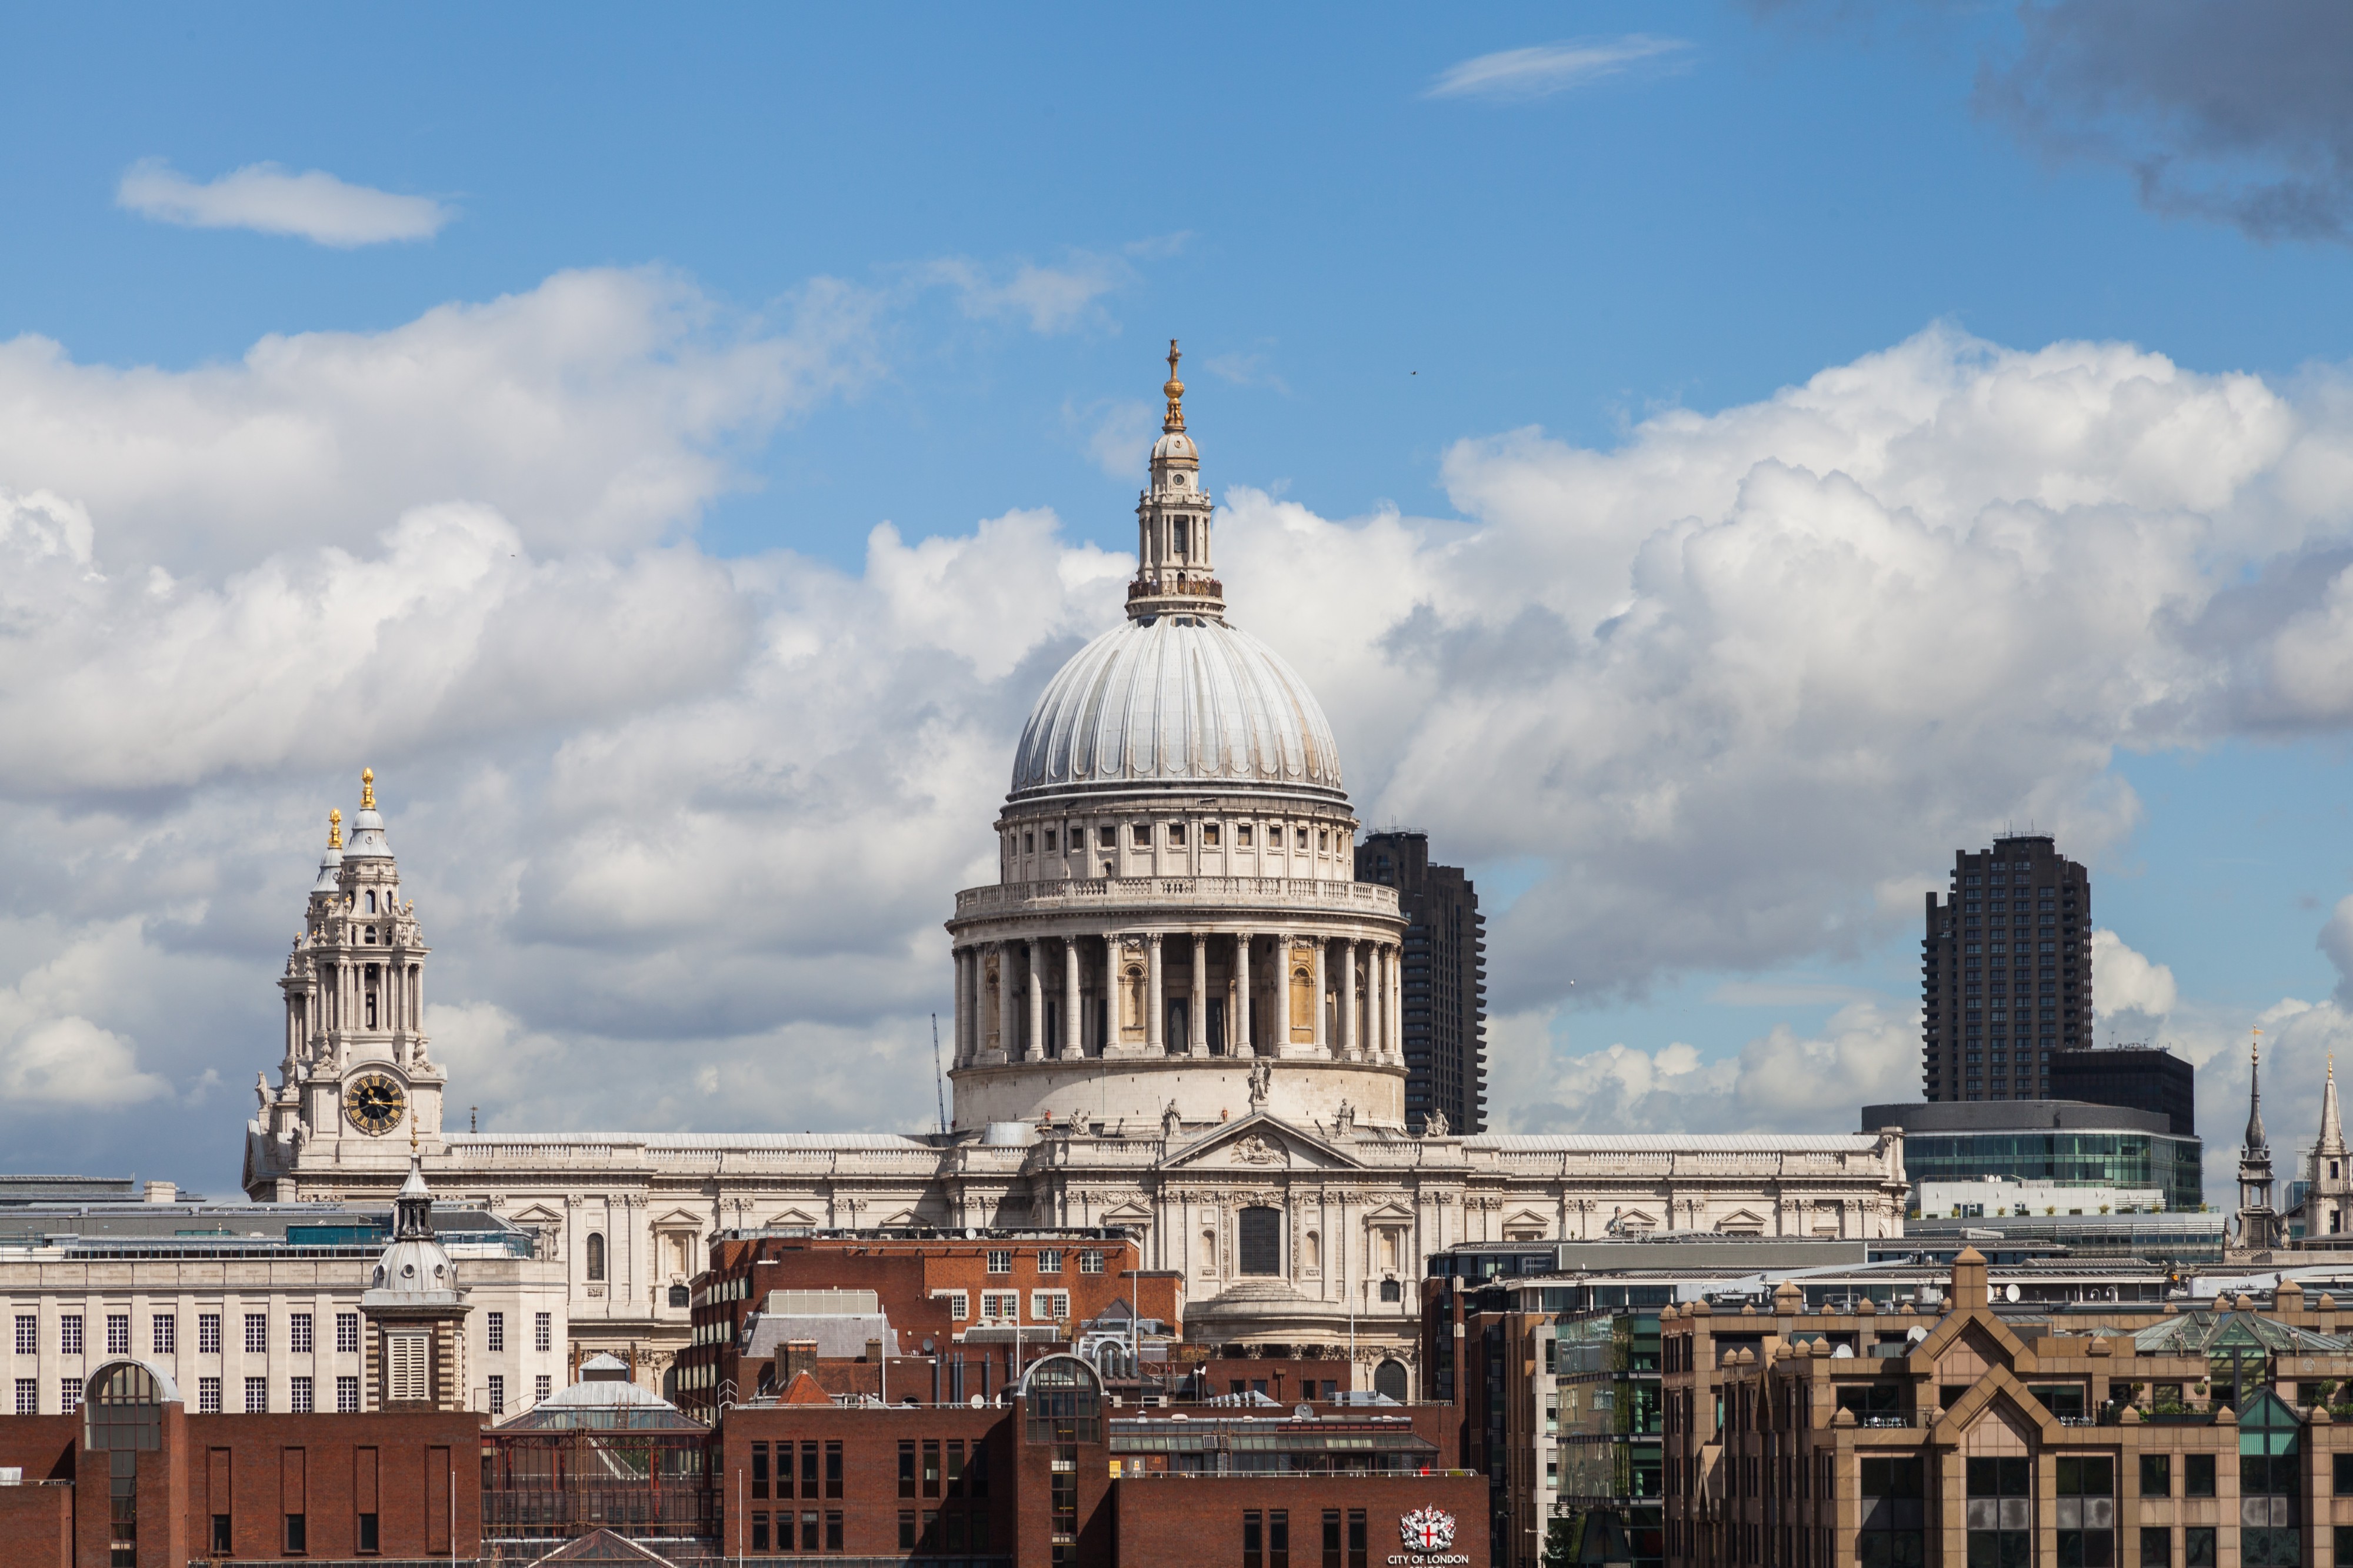 Catedral de San Pablo, Londres, Inglaterra, 2014-08-11, DD 121